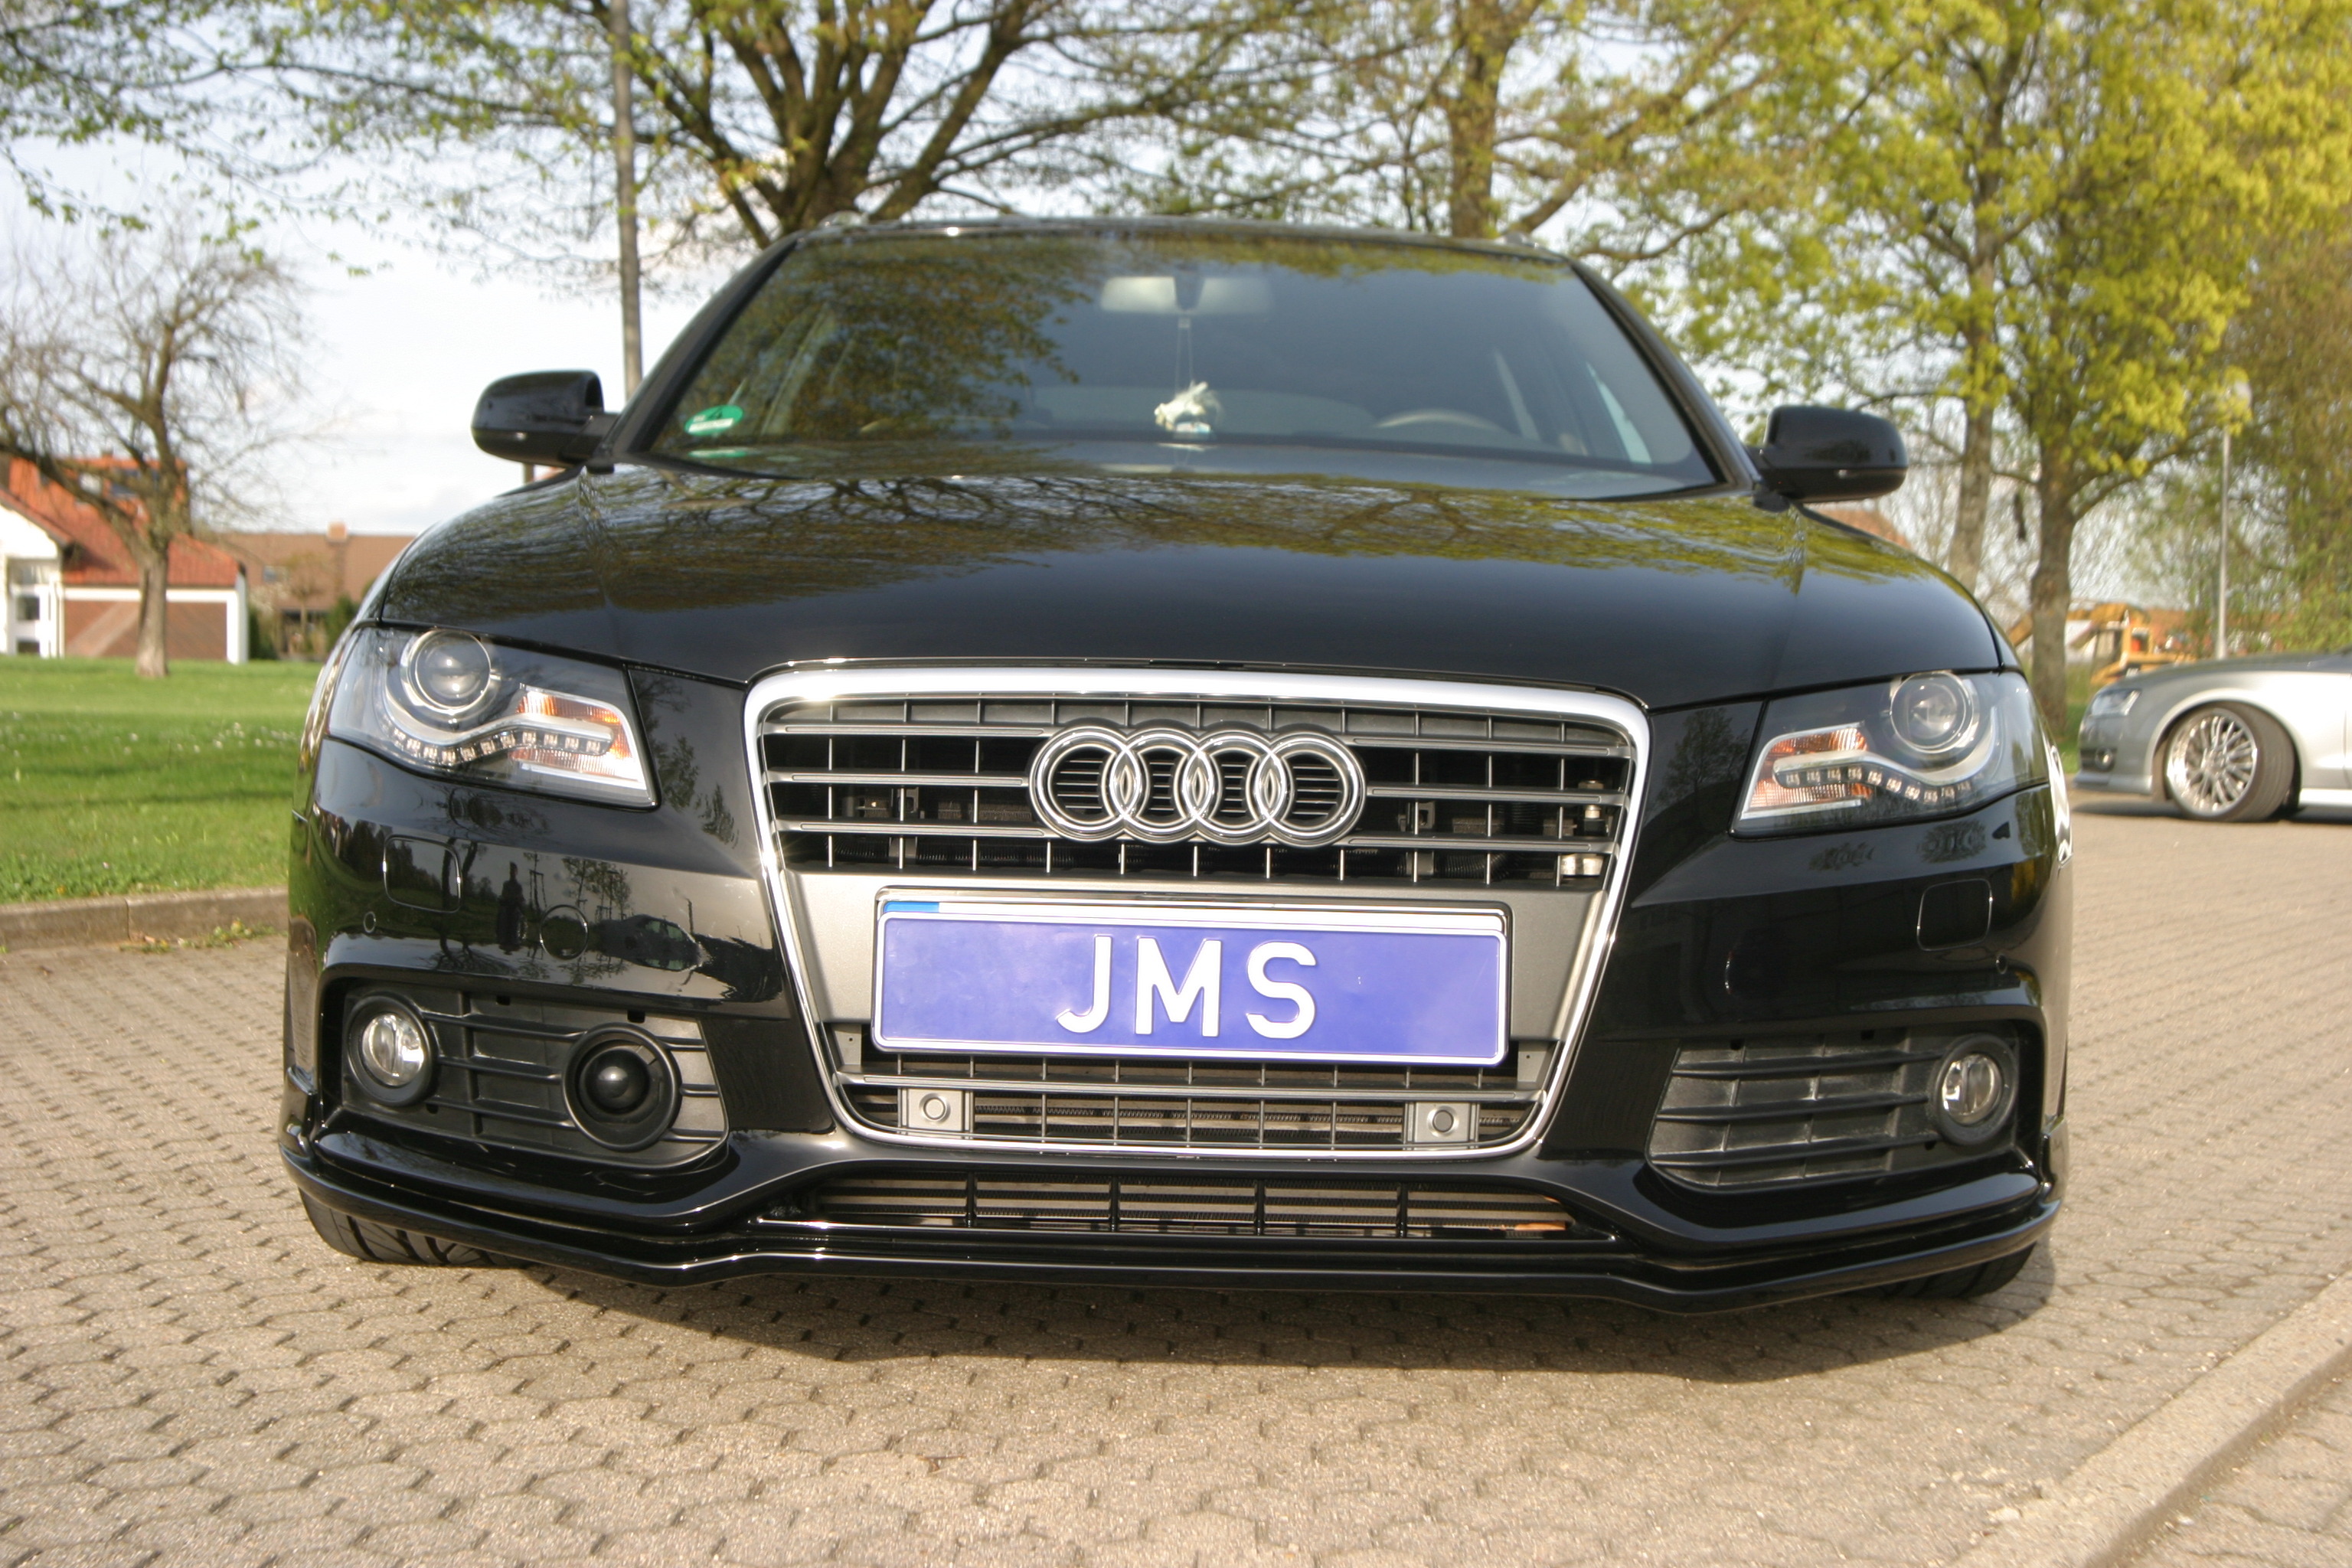 Jms audi tuning & styling for a4 b8, JMS - Fahrzeugteile GmbH, Story -  PresseBox